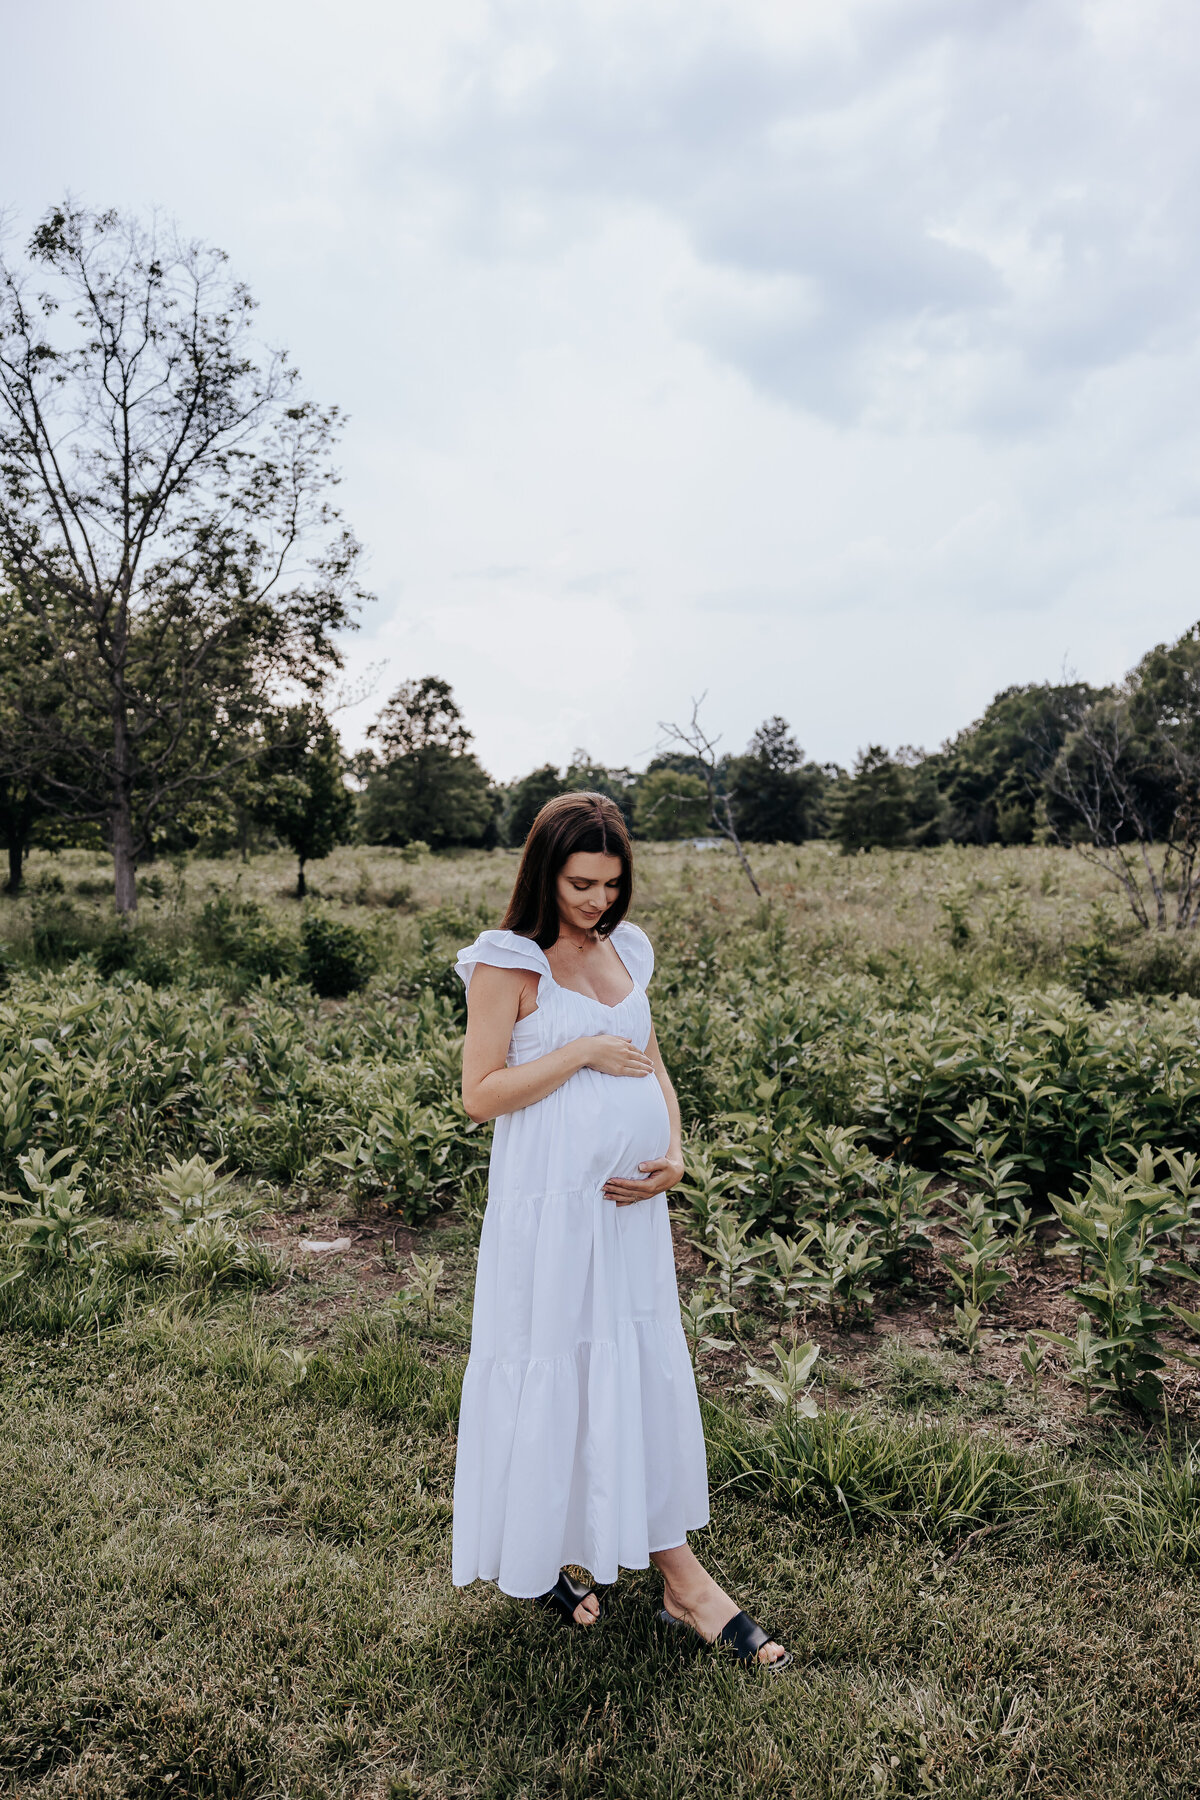 Nashville newborn photographer captures woman wearing white dress during outdoor maternity photos